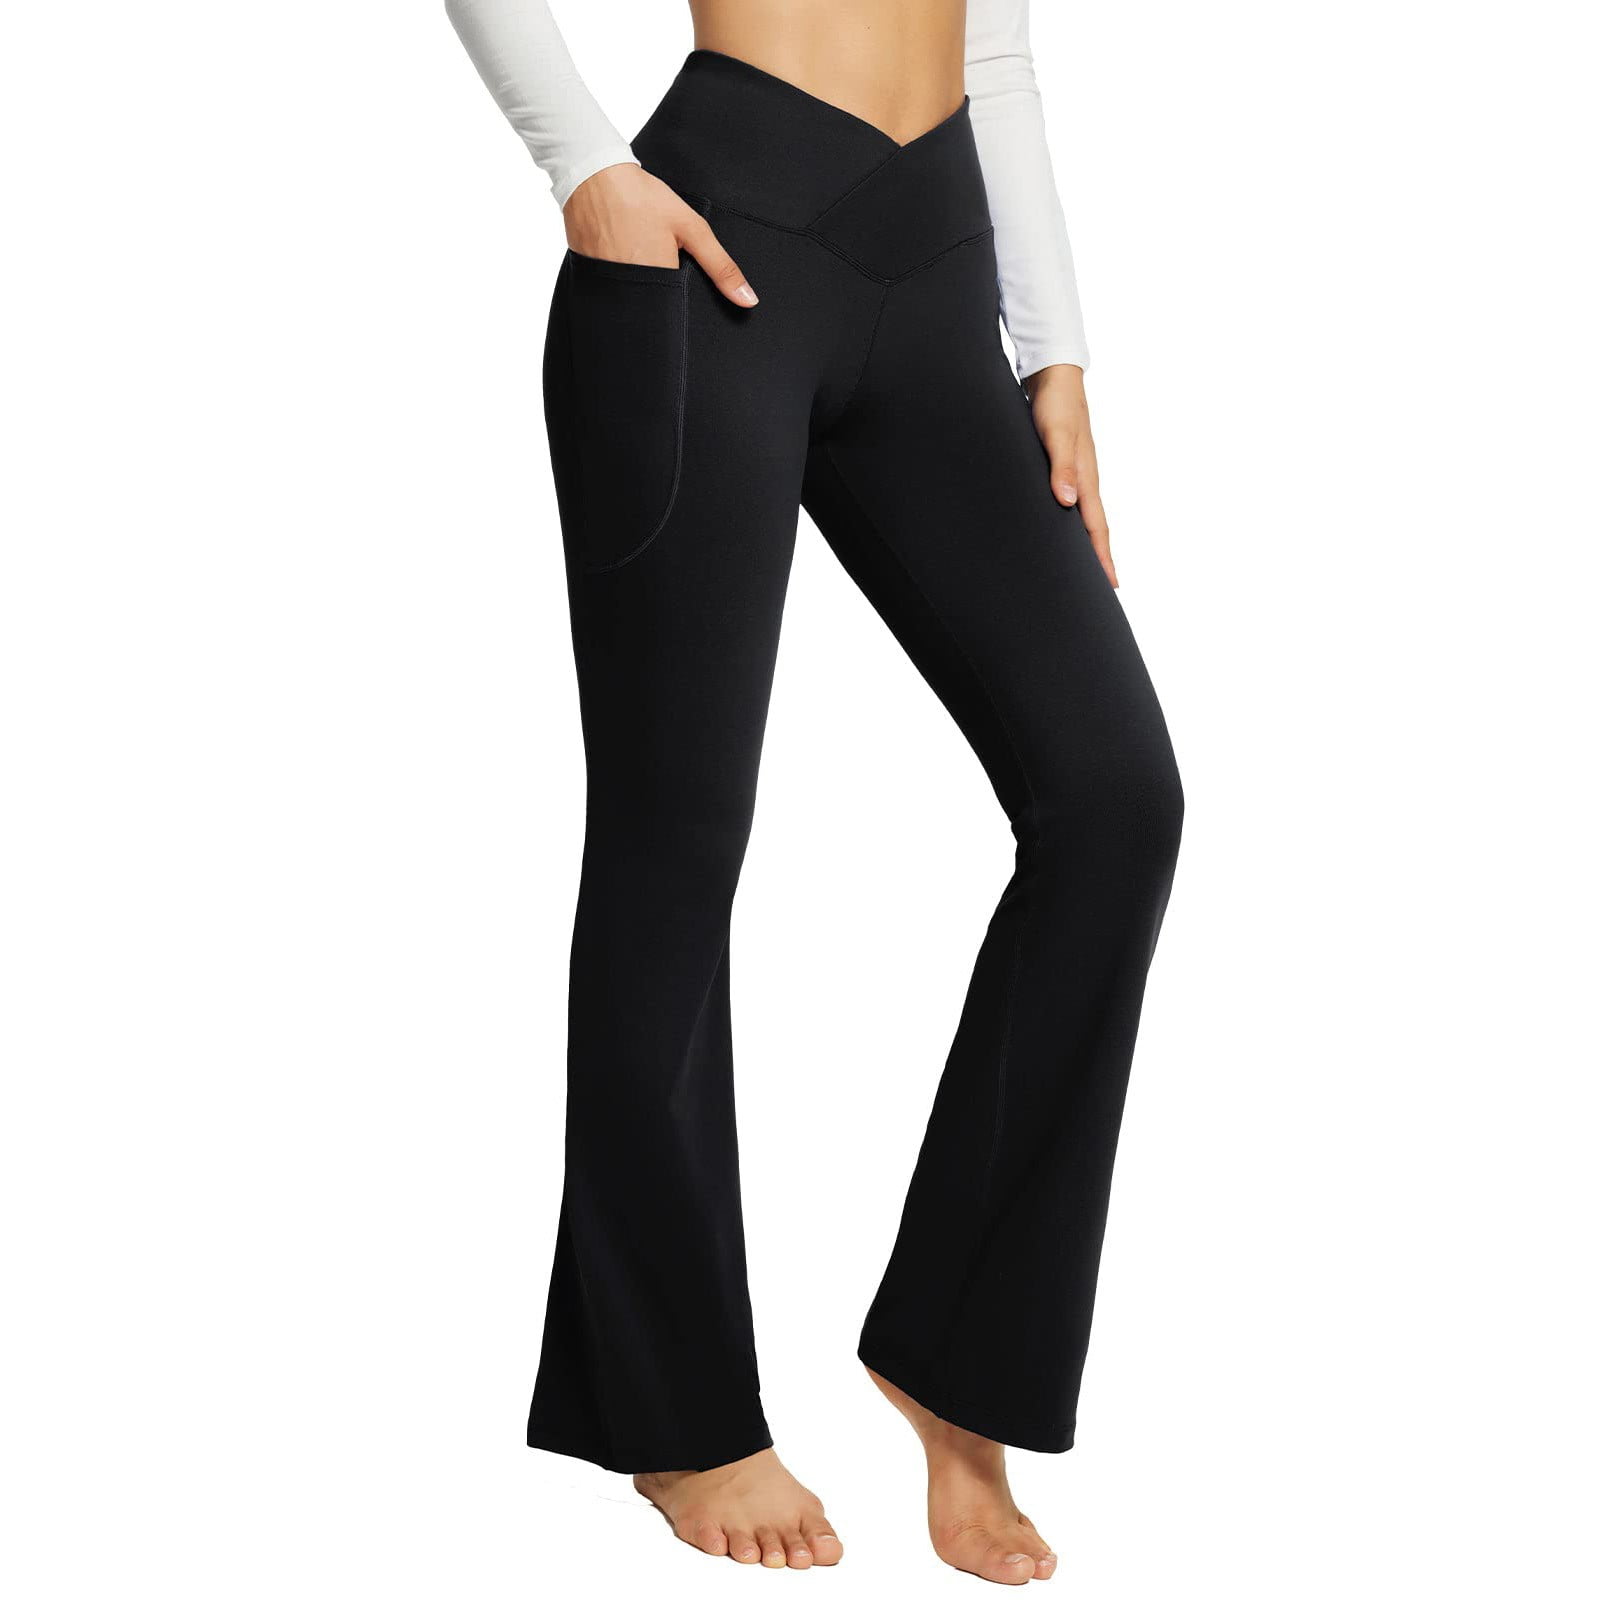 Labakihah Yoga Pants Women Leggings High Waist Stretchy